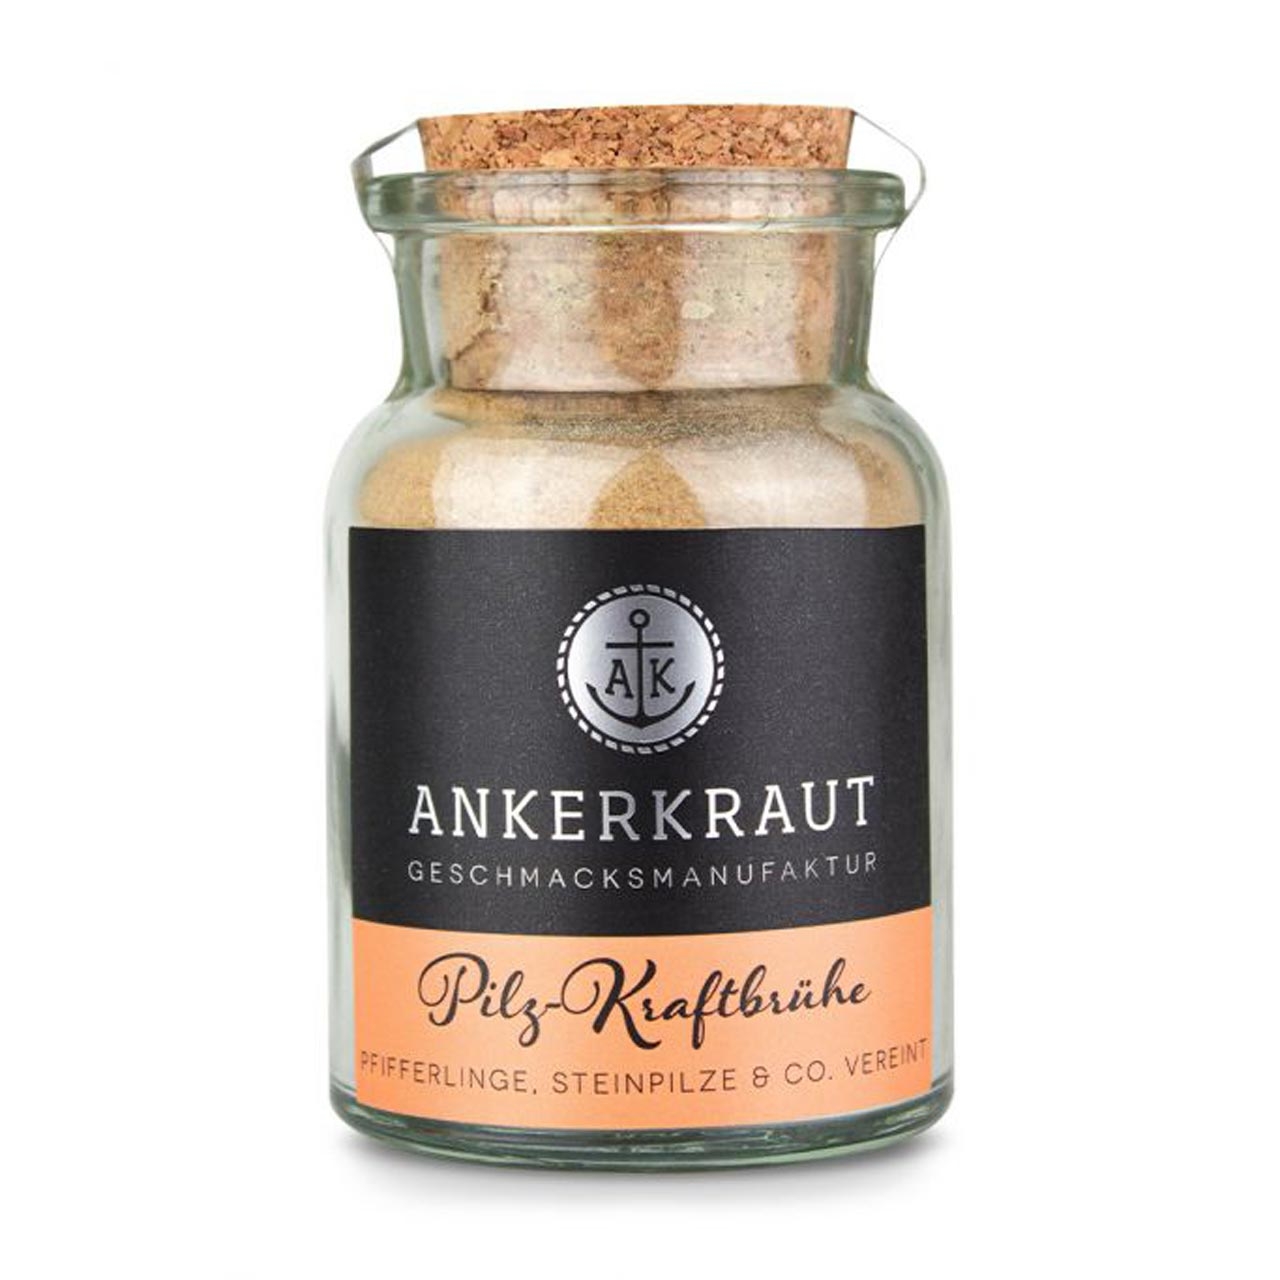 Ankerkraut Pilz-Kraftbrühe, 100g Korkenglas